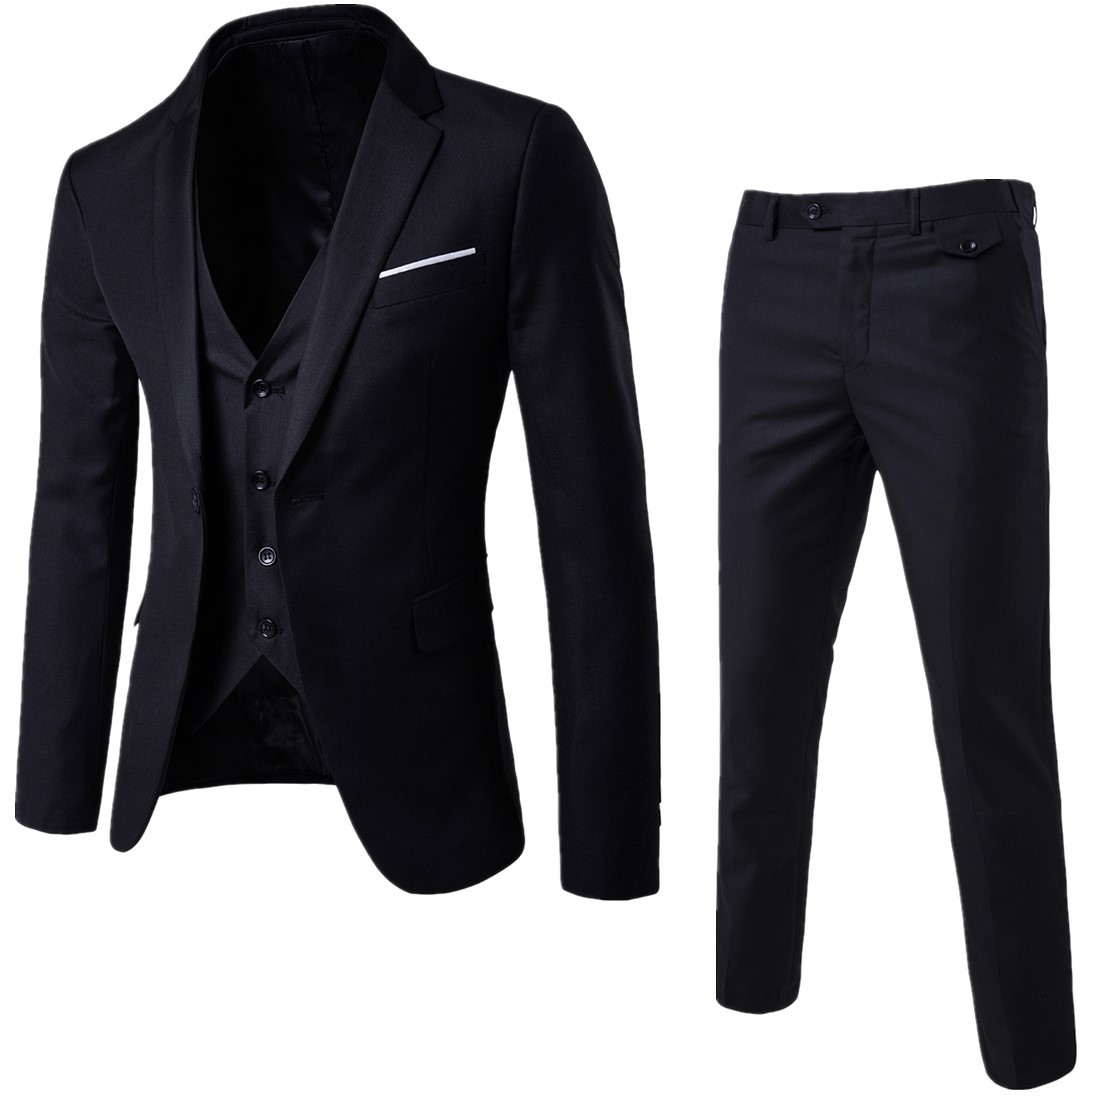 Men's new suit, double breasted suit, slim business suit, work suit, wedding three piece suit